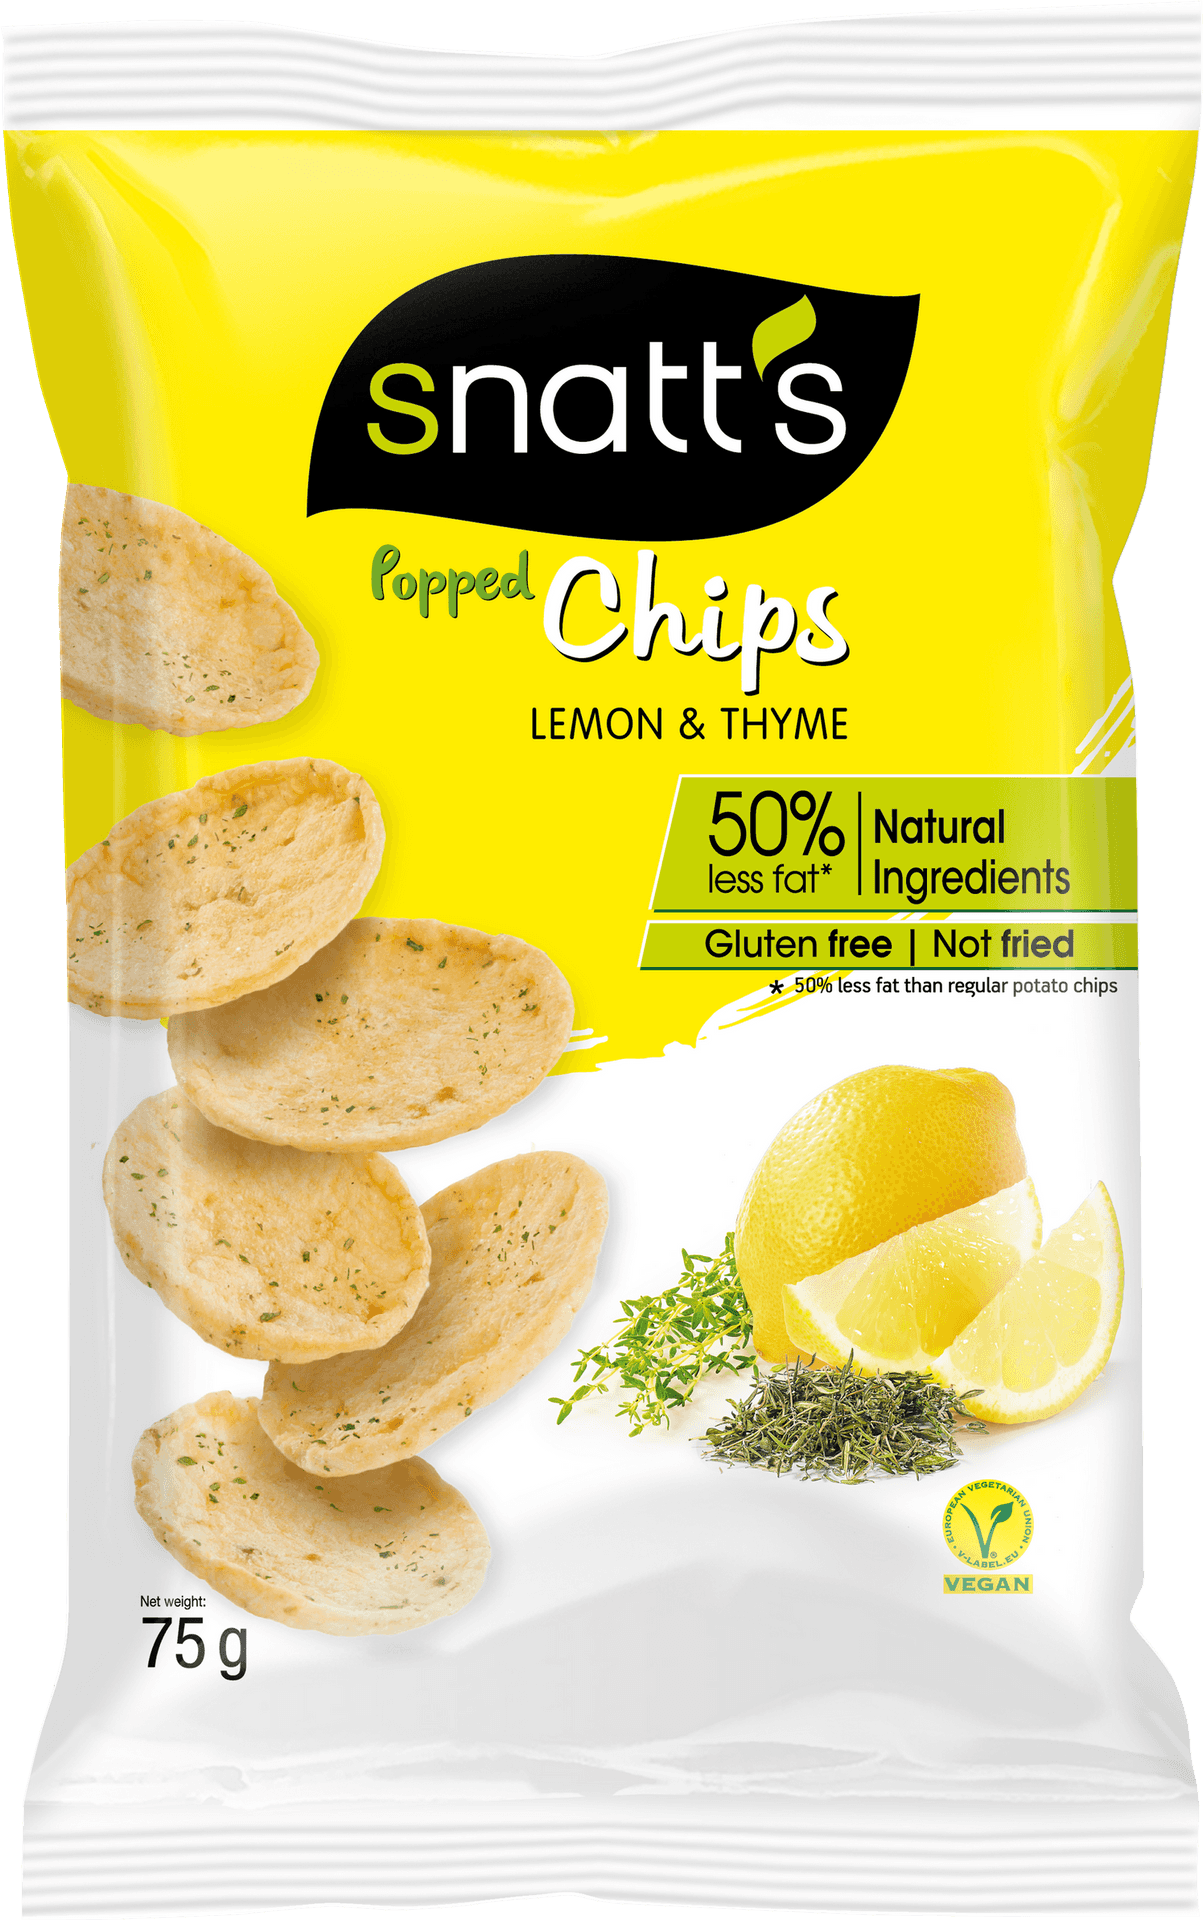 Snatts Popped Chips Lemon Thyme Packaging PNG